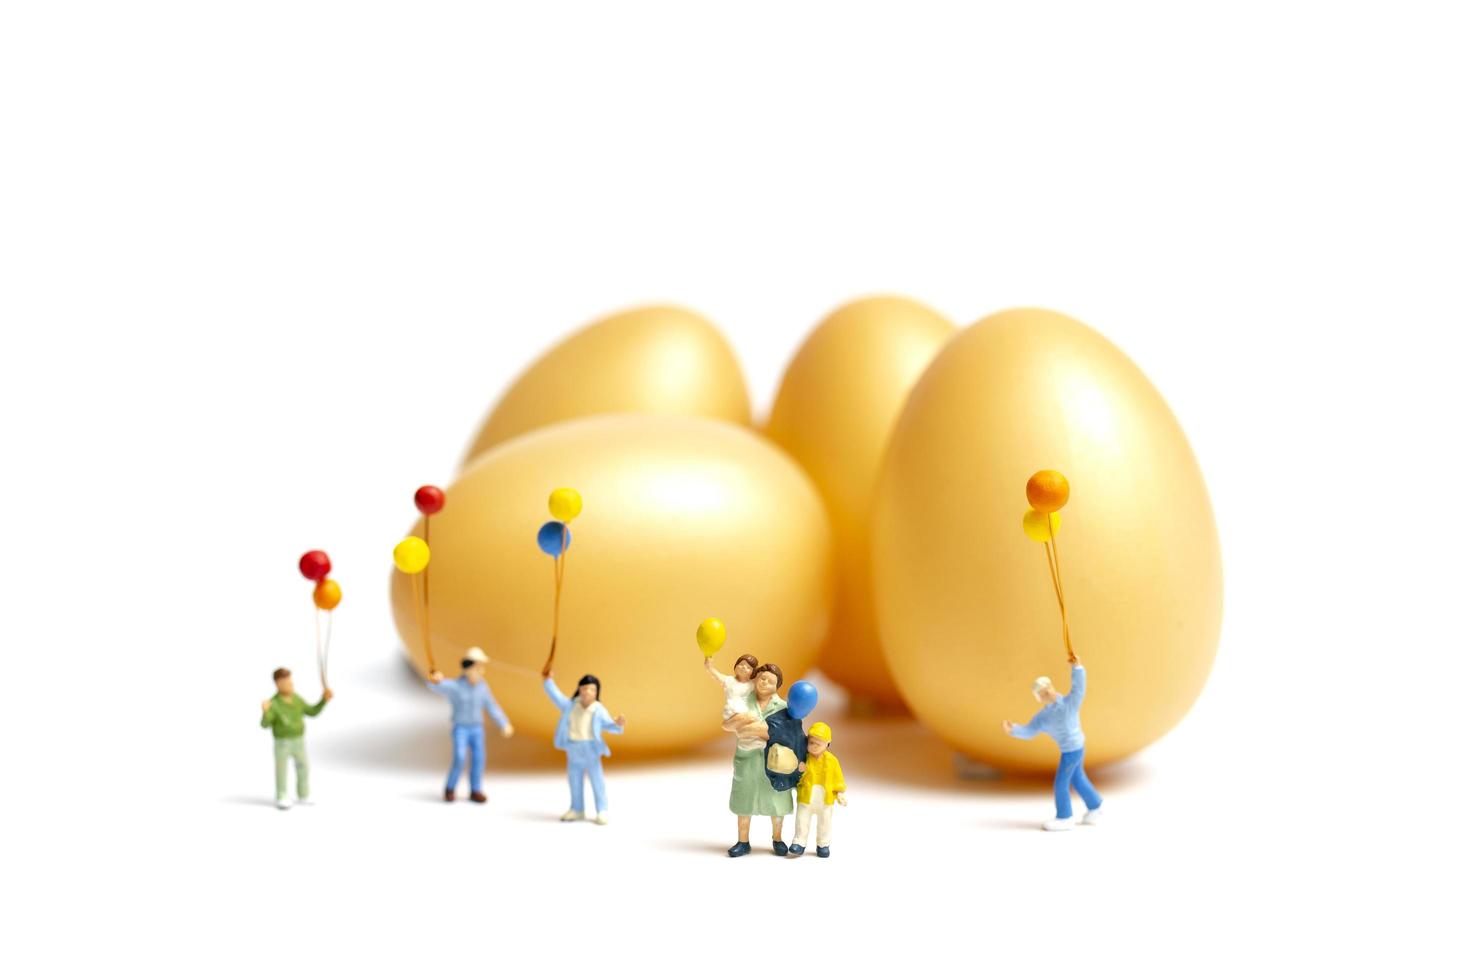 miniatyrfolk som håller ballonger som firar påsk på en vit bakgrund foto